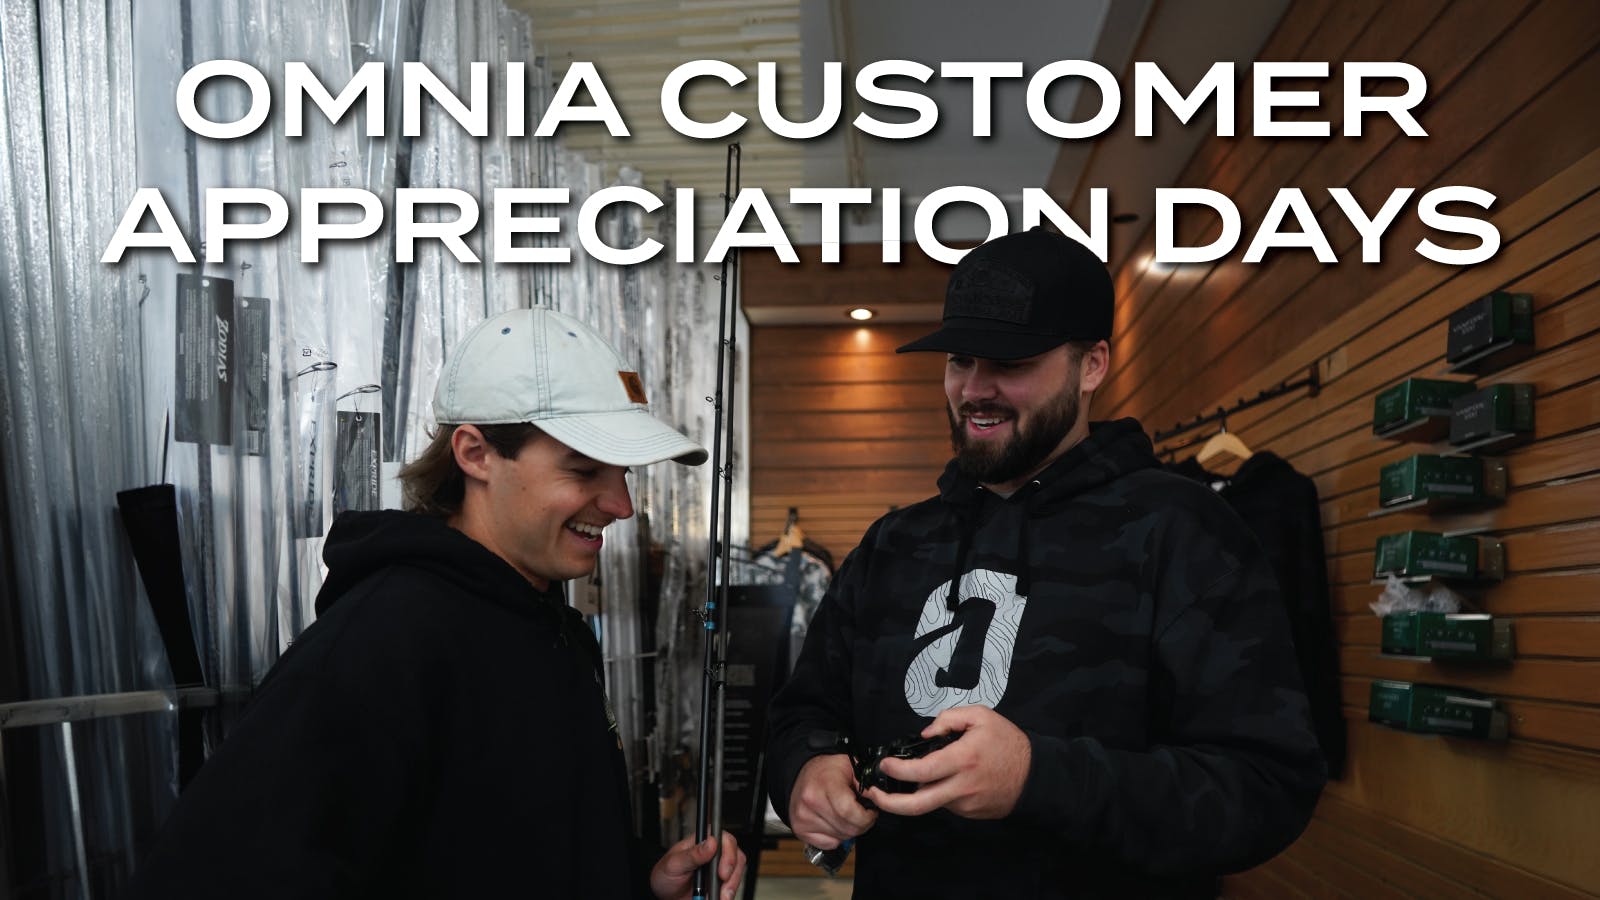 Omnia Customer Appreciation Days at Omnia Fishing